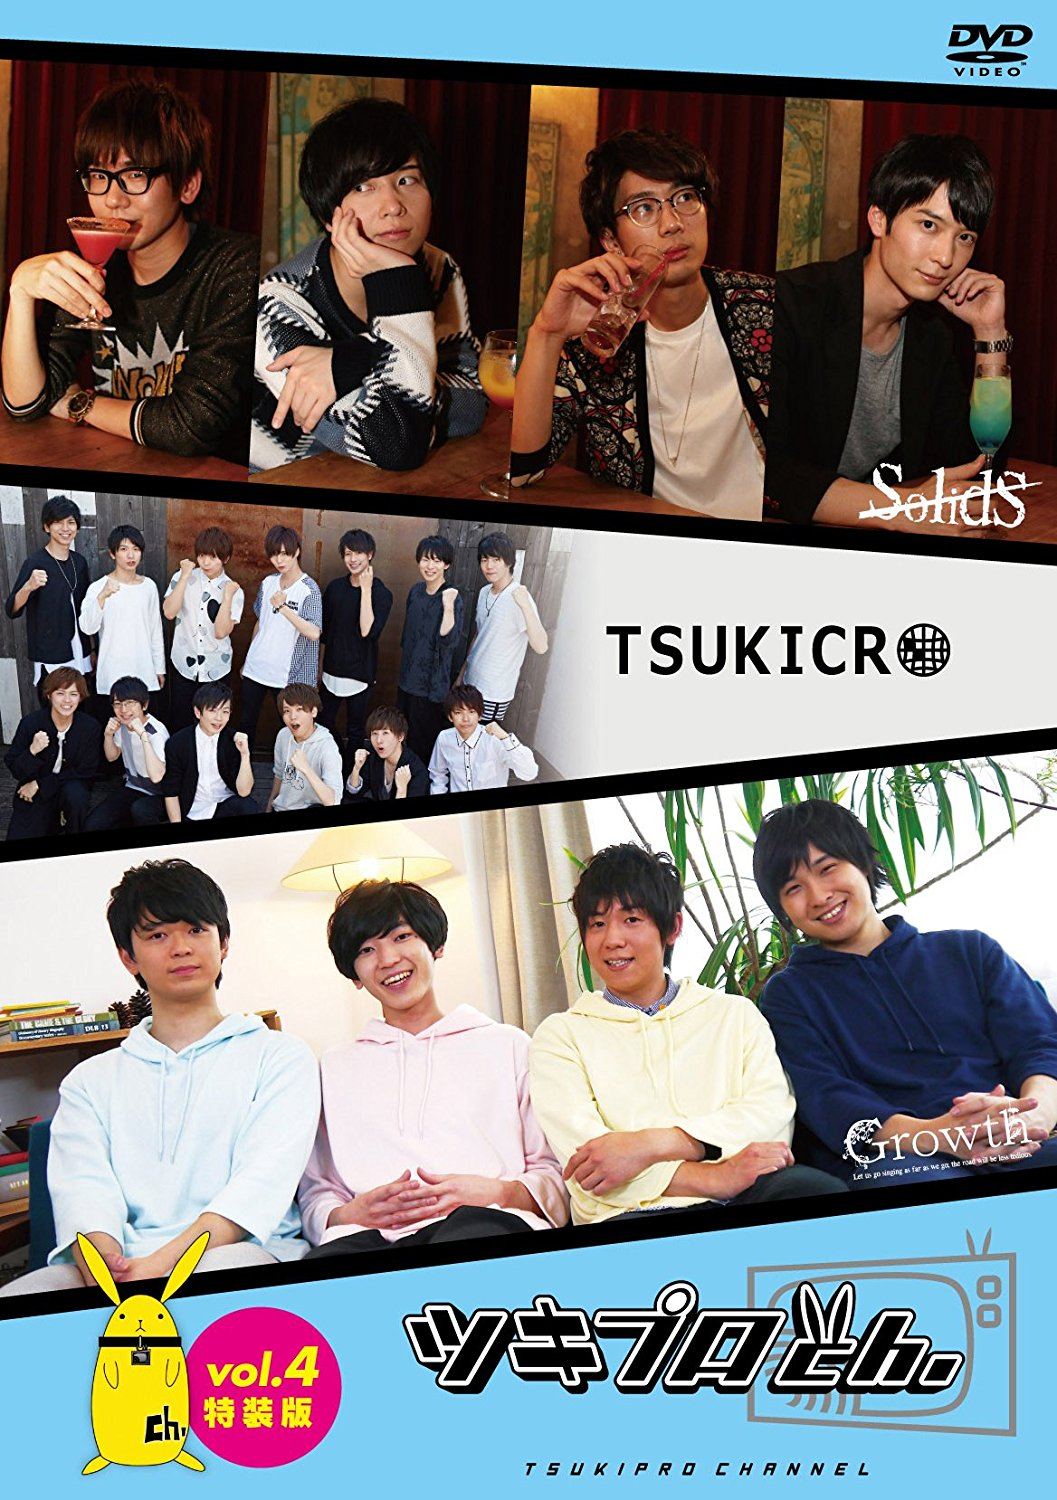 Tsukipro Ch. Vol.4 [Special Edition]